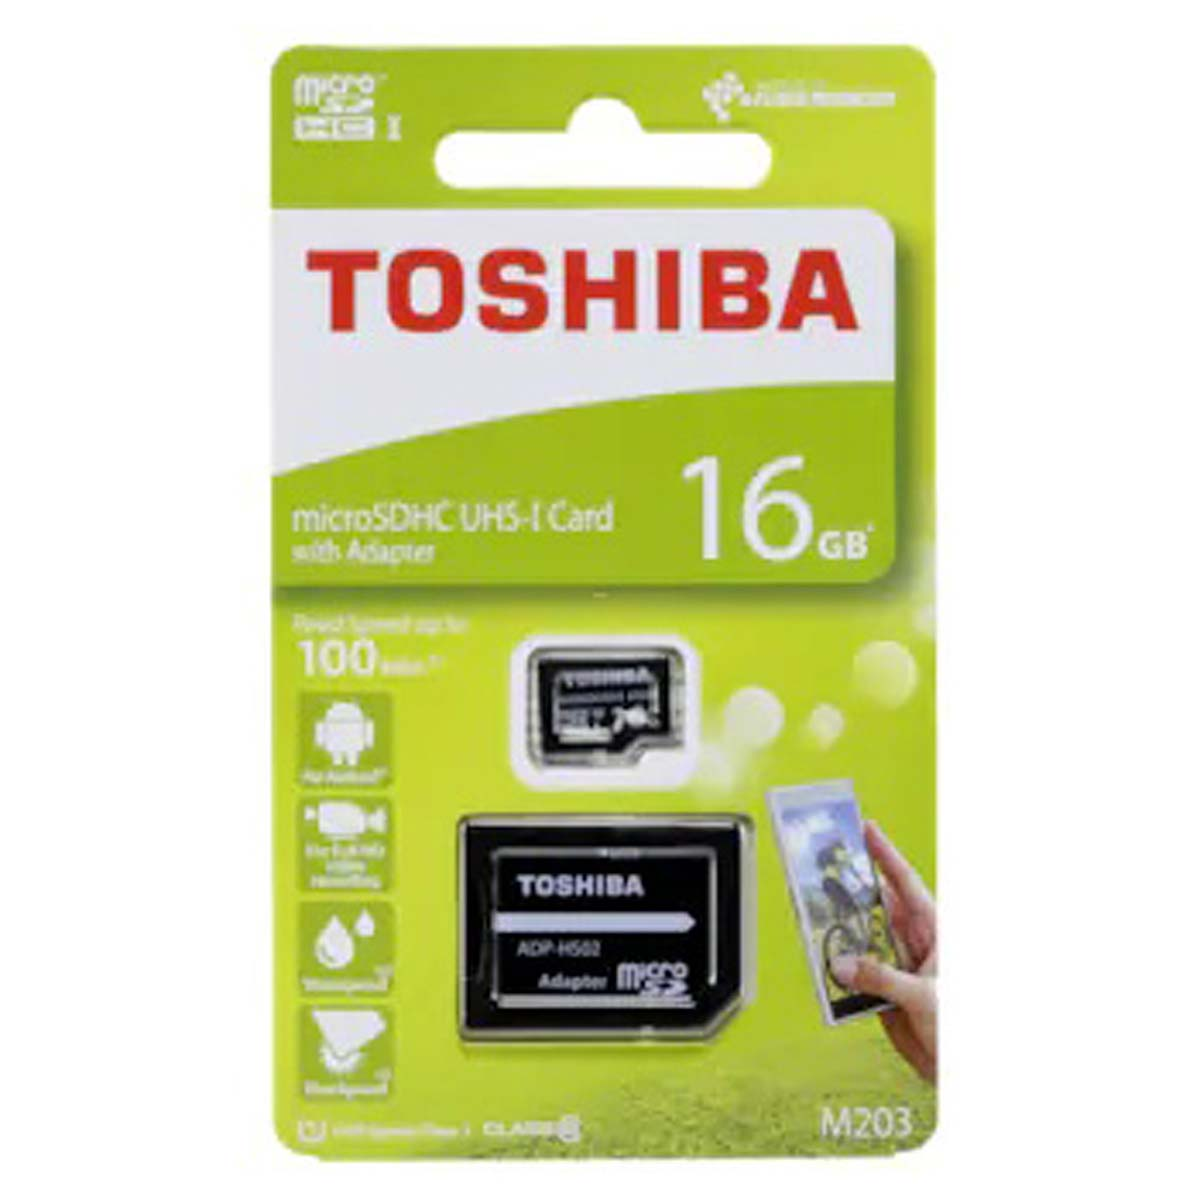 16 Mbit/s 41094, 100 Speicherkarte, Micro-SDHC GB, TOSHIBA